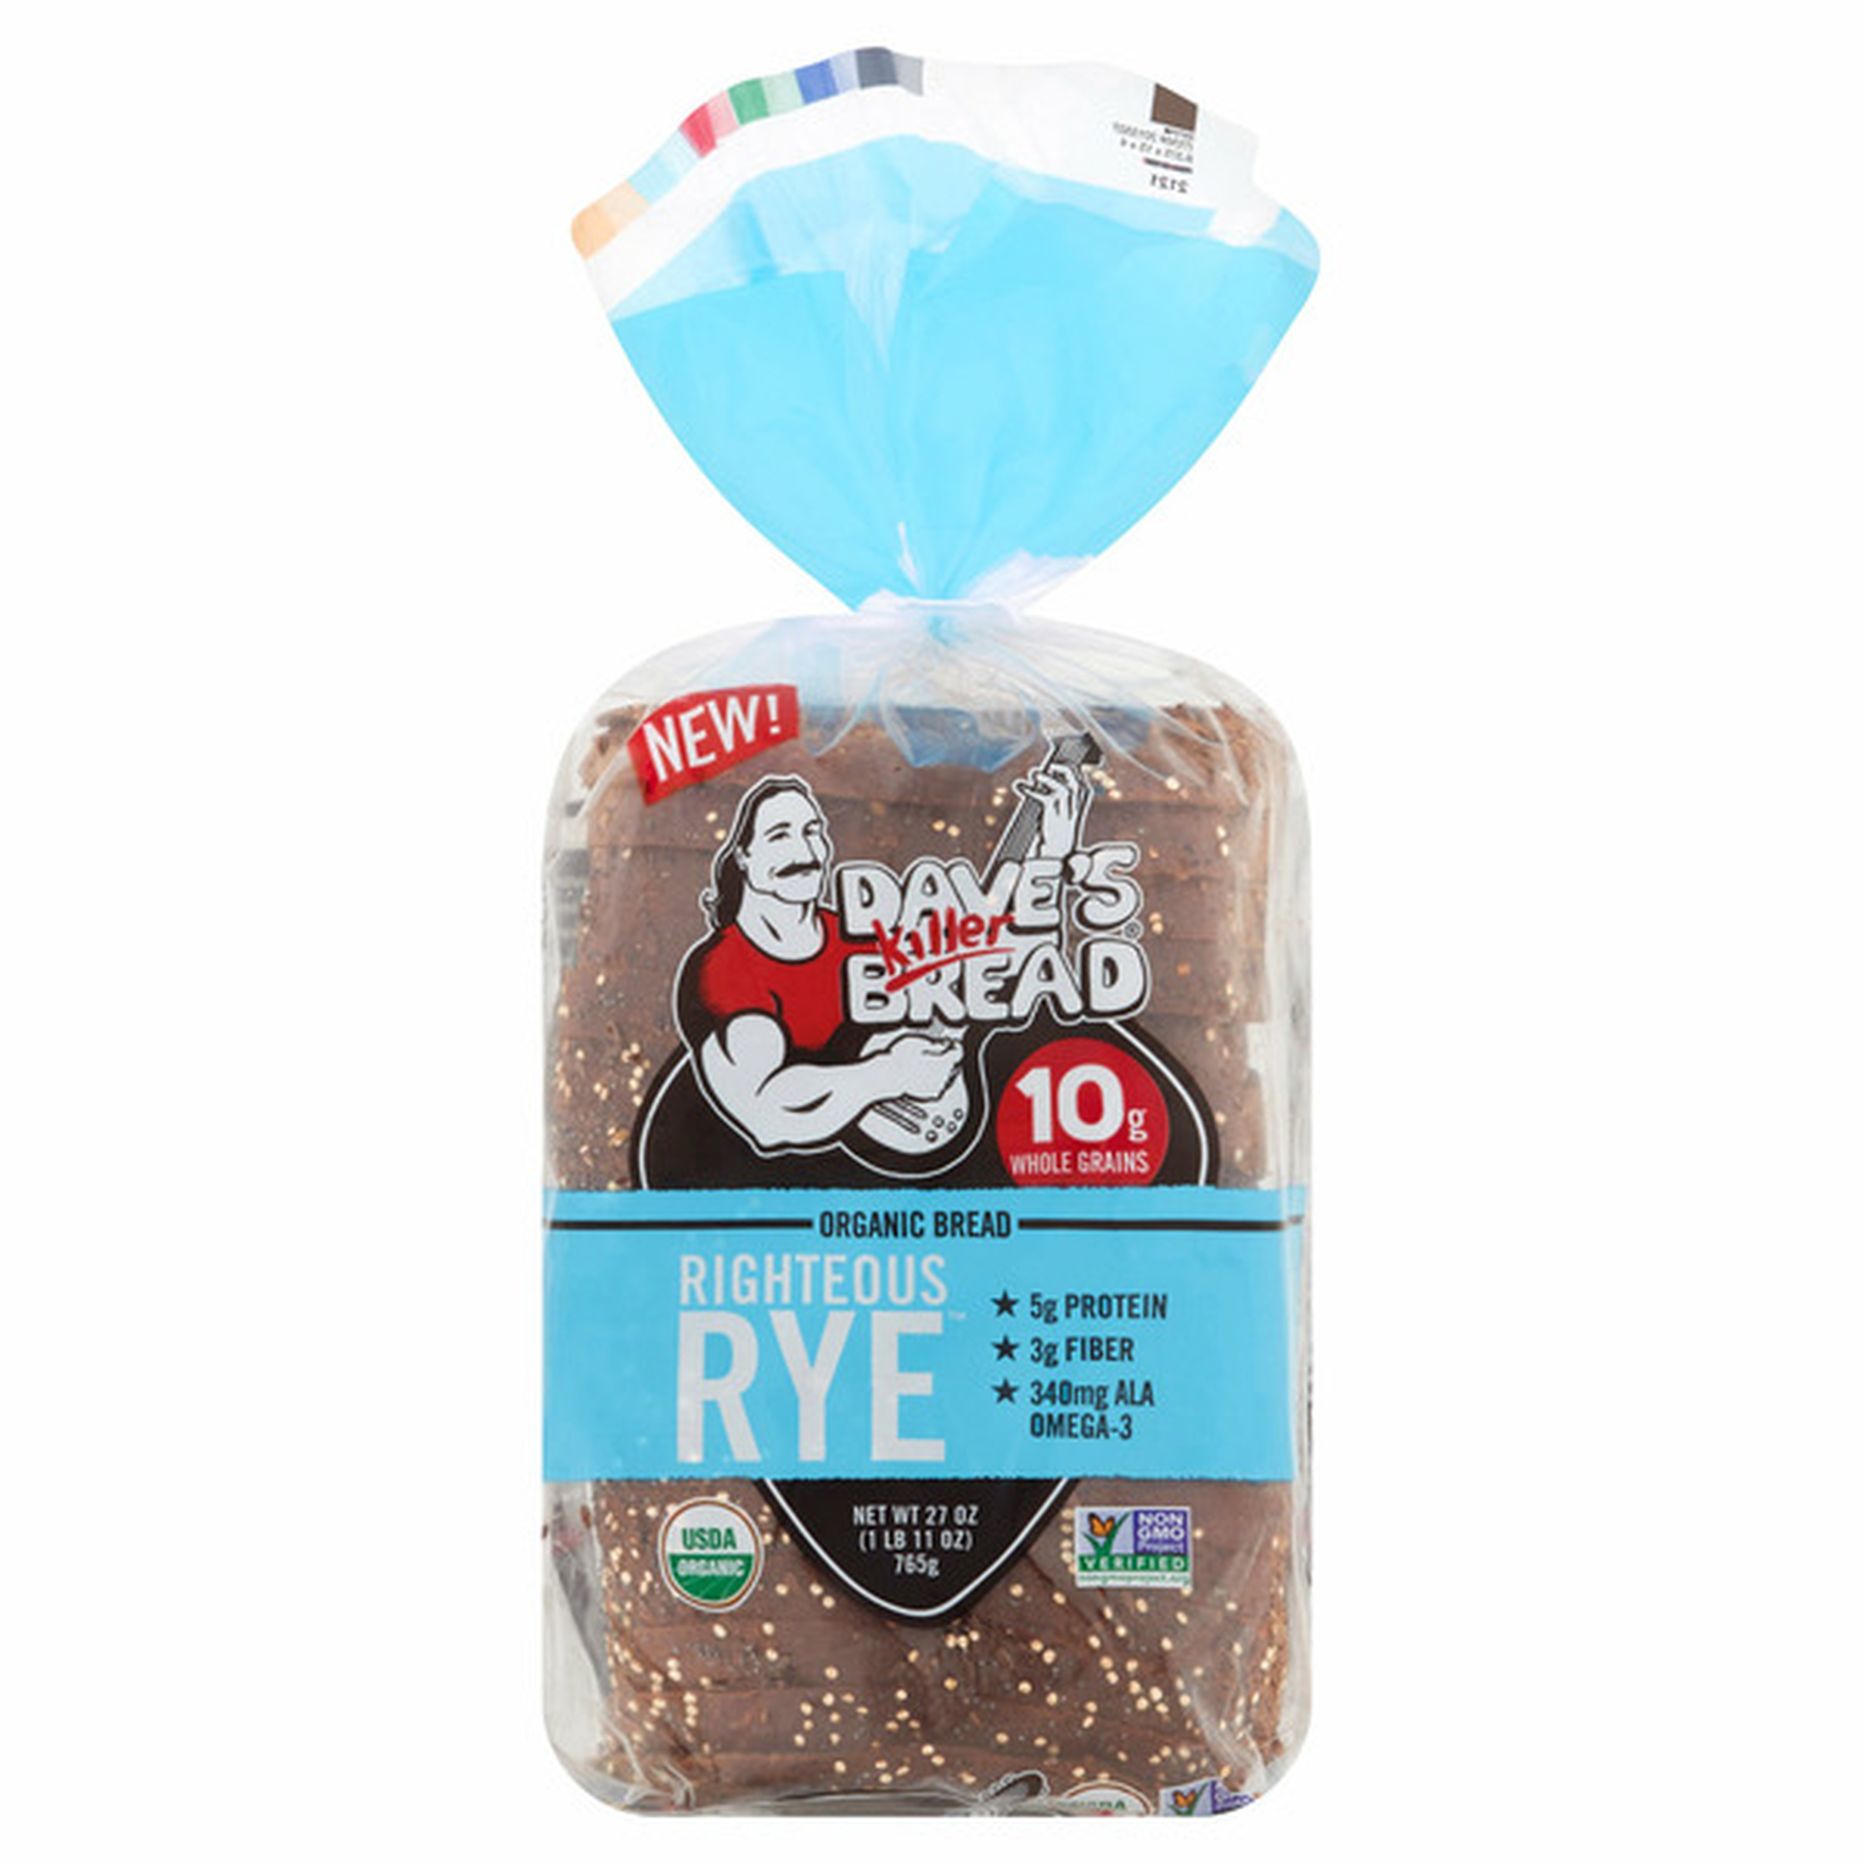 Dave's Killer Bread Righteous Rye Bread, Organic Rye Bread, 27 oz Loaf ...